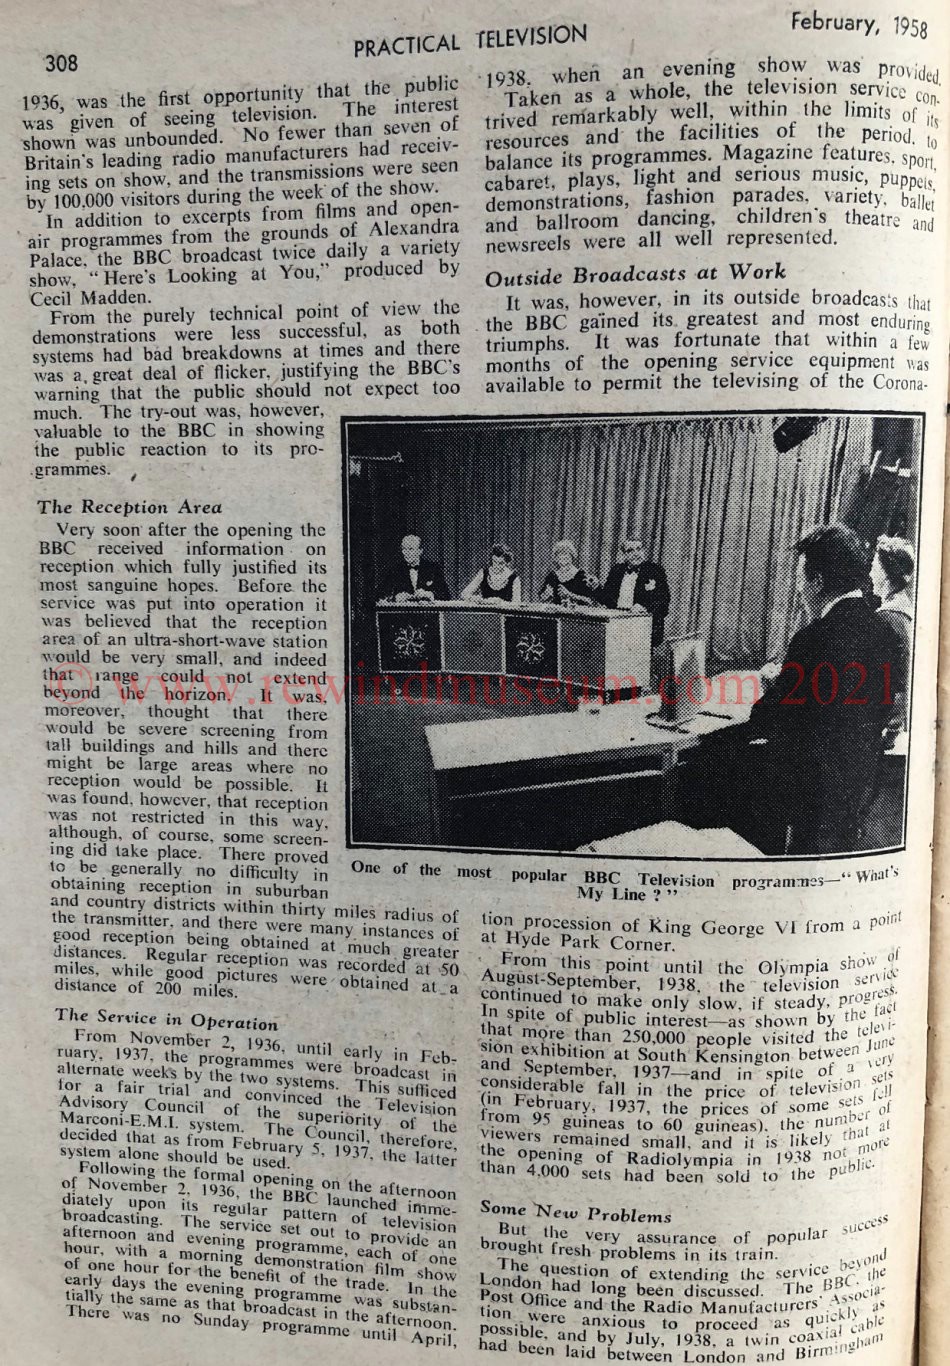 Practical Television magazine. Feb 1958. TV History